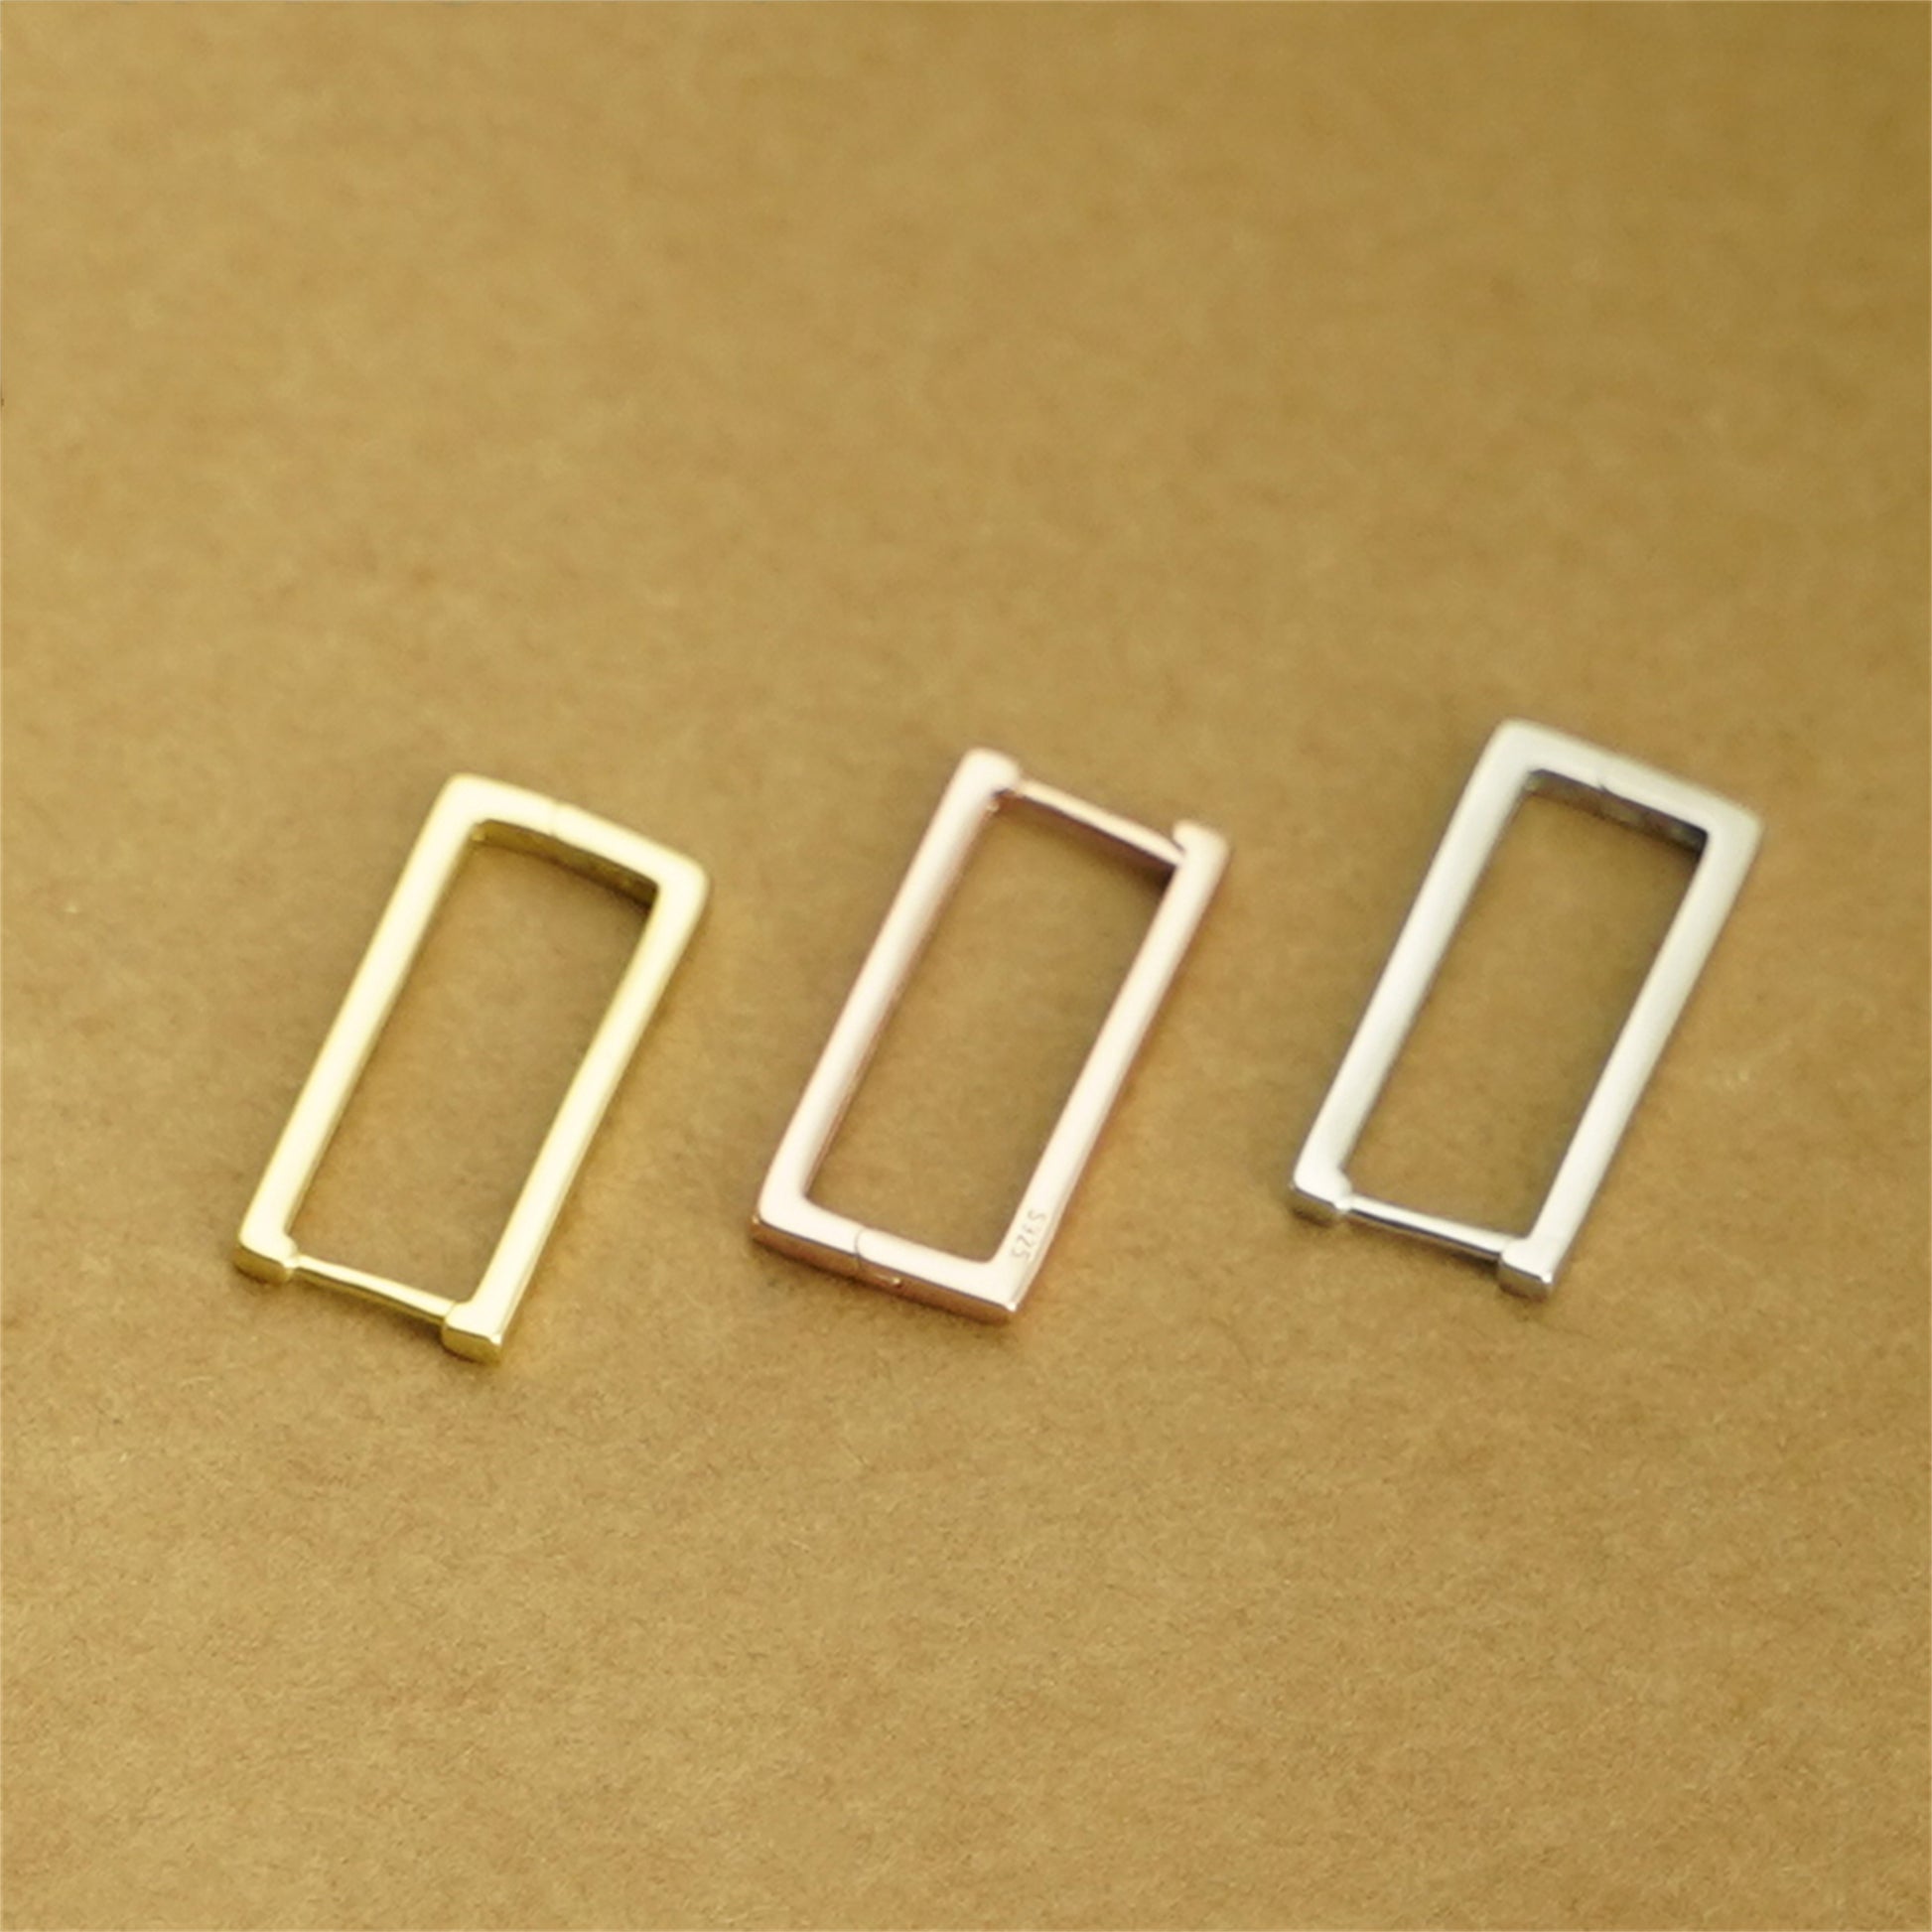 Square Huggie Hoop Drop Earrings in 18K Gold Plated Sterling Silver - sugarkittenlondon